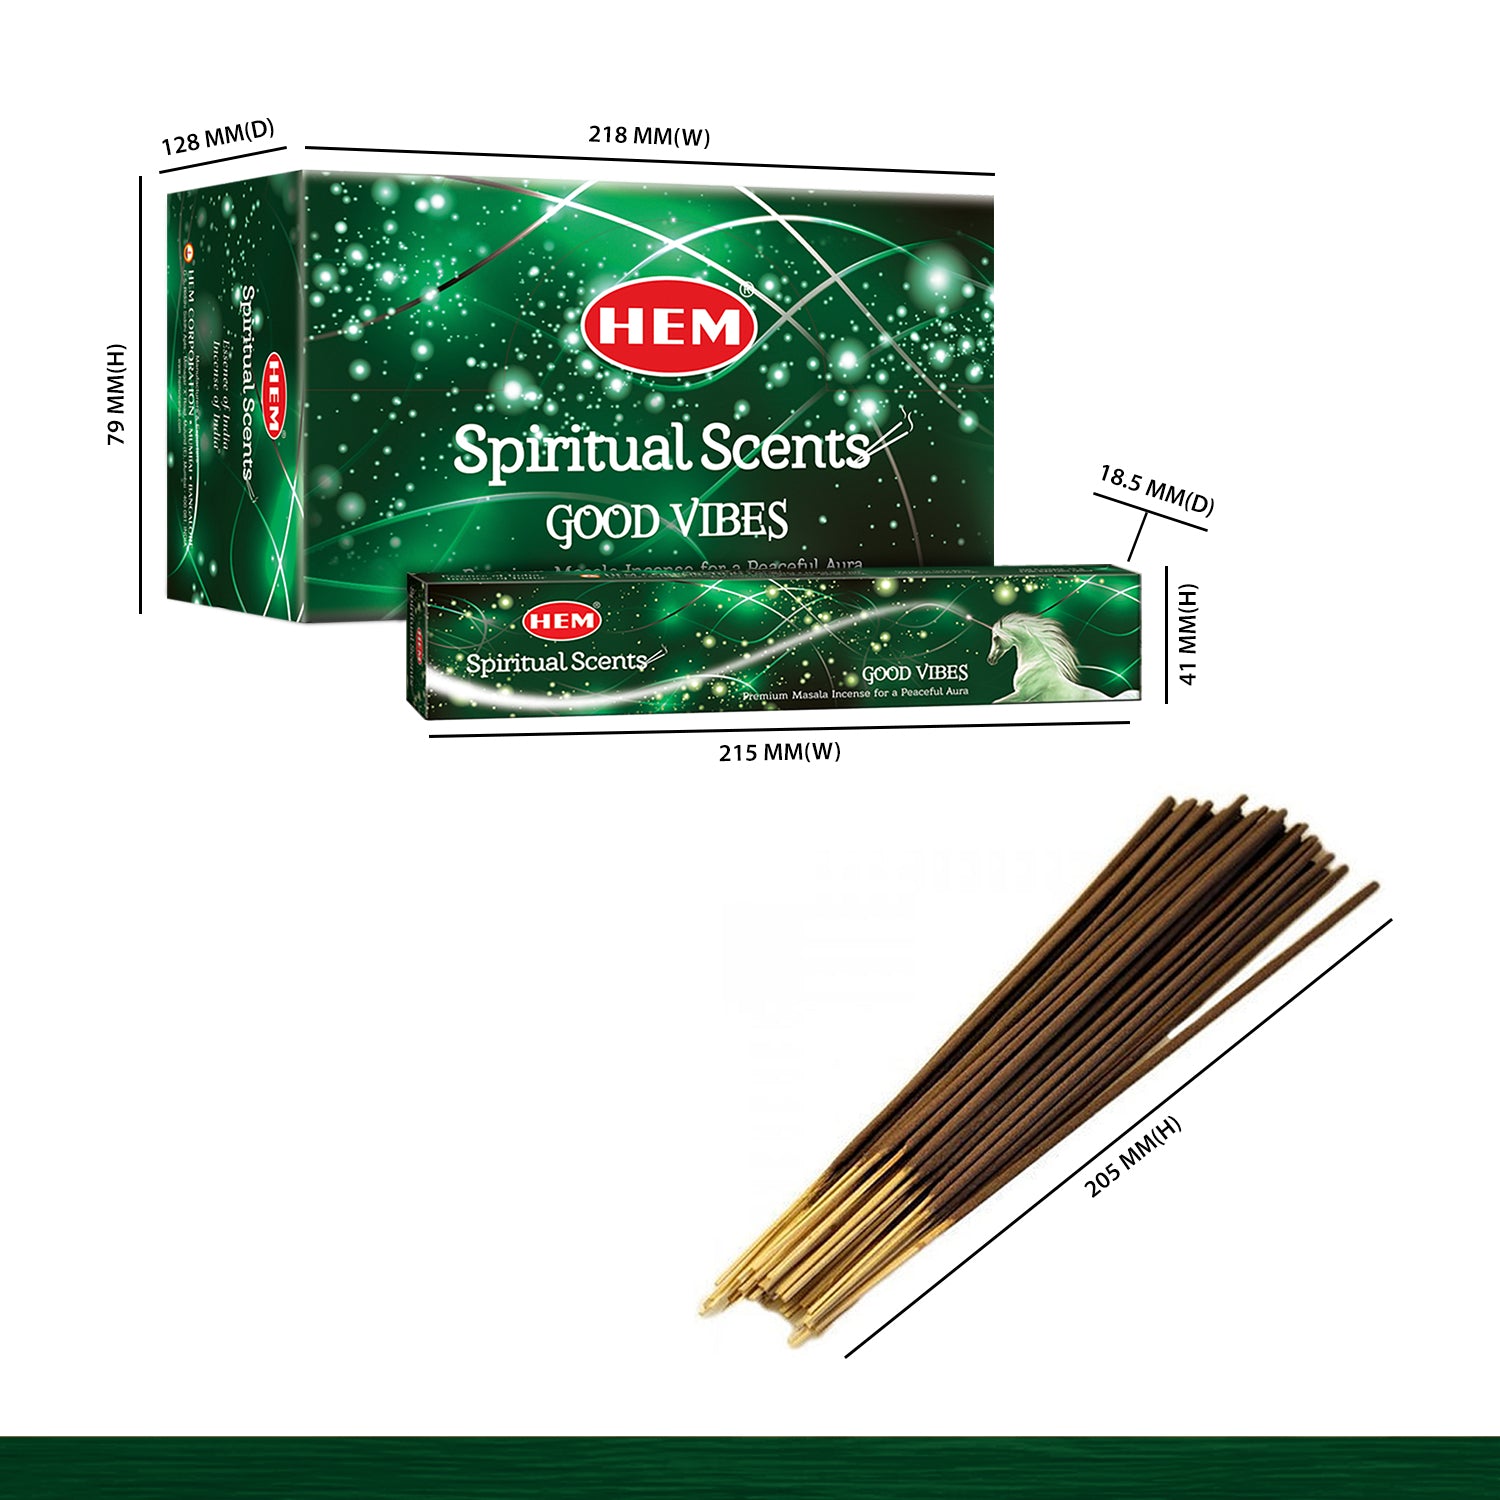 hem-spiritual-scents-good-vibes-premium-masala-incense-sticks-size